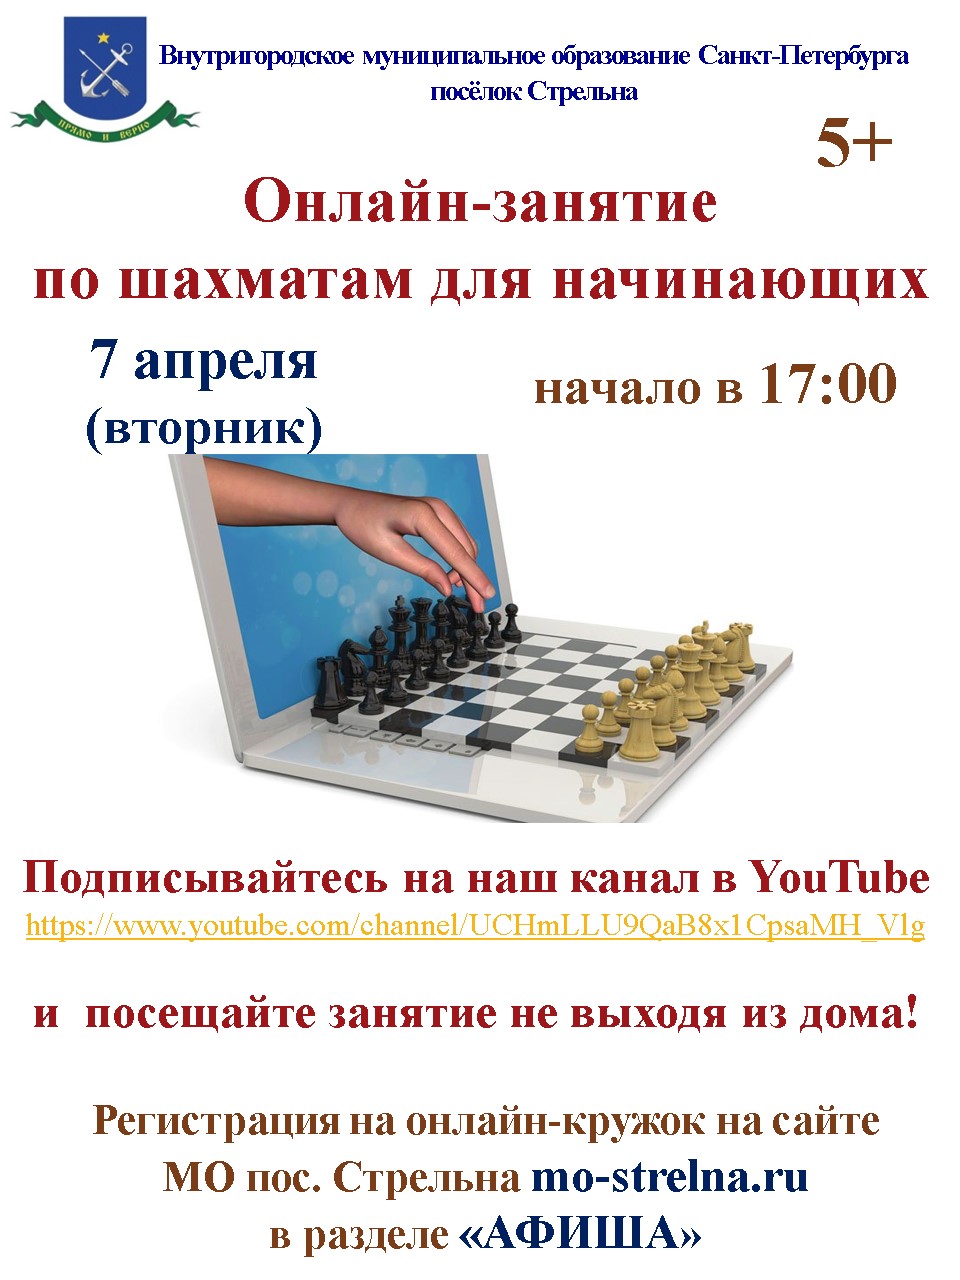 Онлайн-занятия шахматами